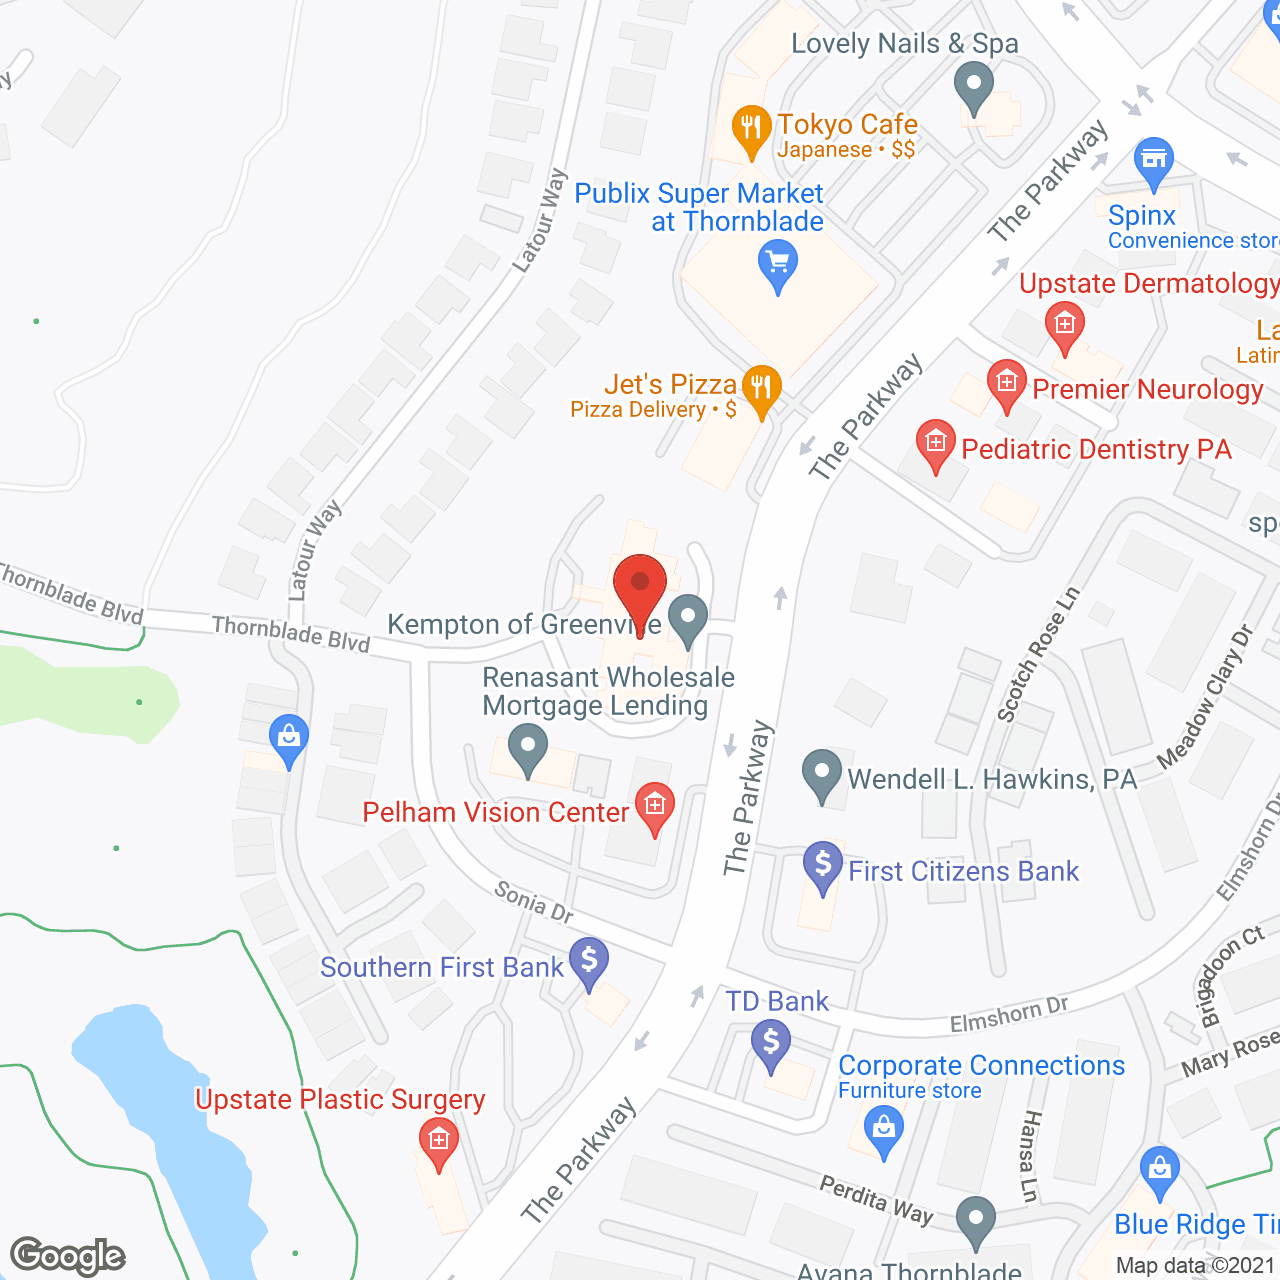 TerraBella Thornblade in google map